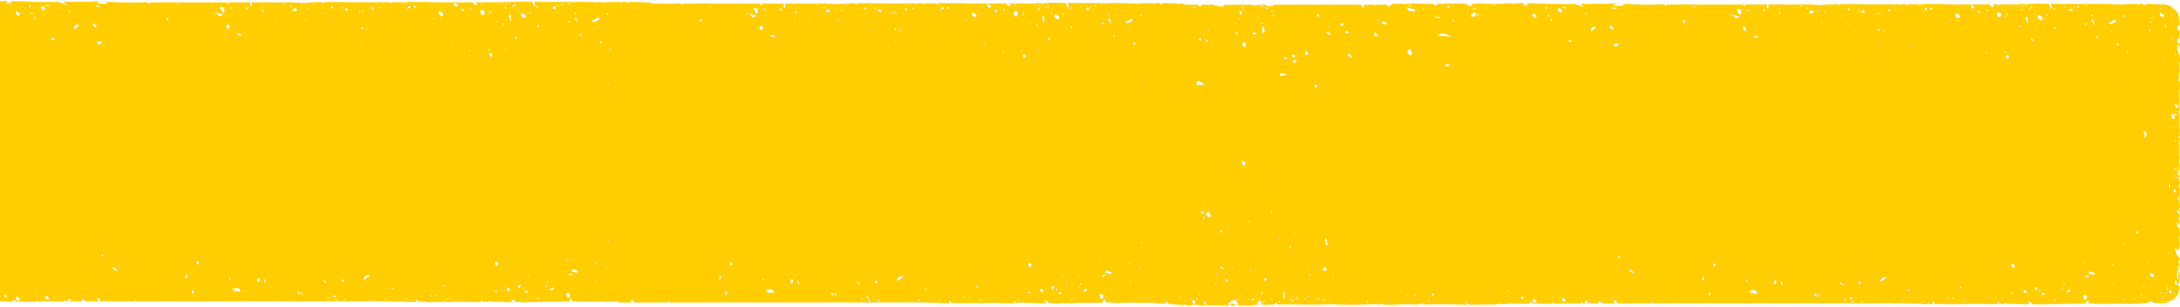 yellow_bg-png